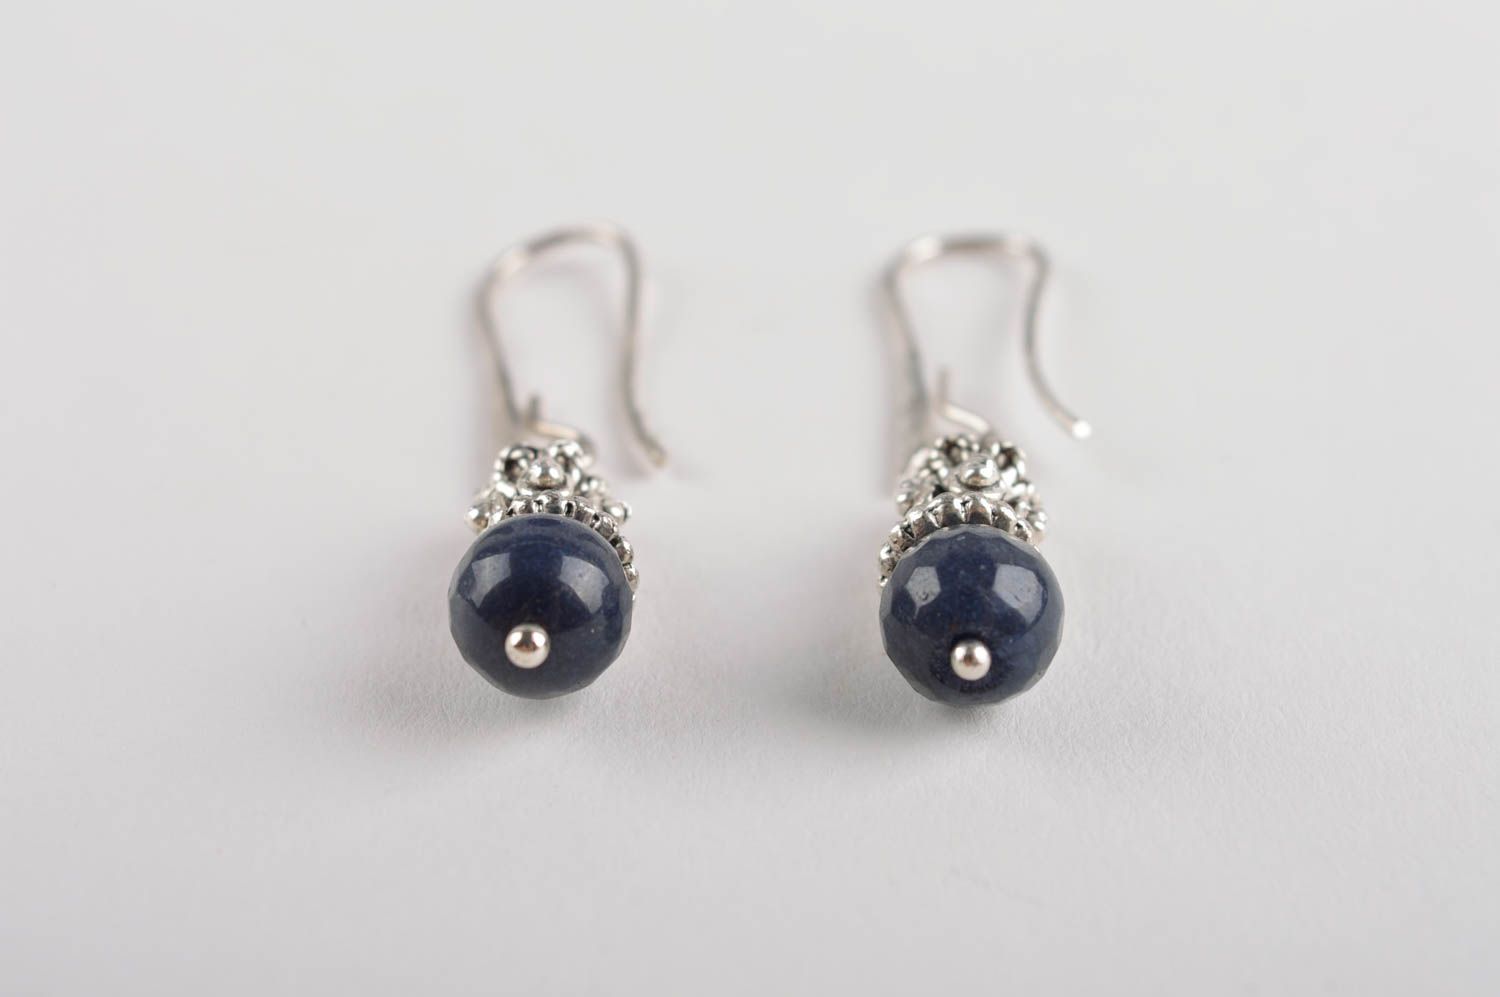 Handmade jewelry stone earrings dangling earrings women accessories gift for her photo 3